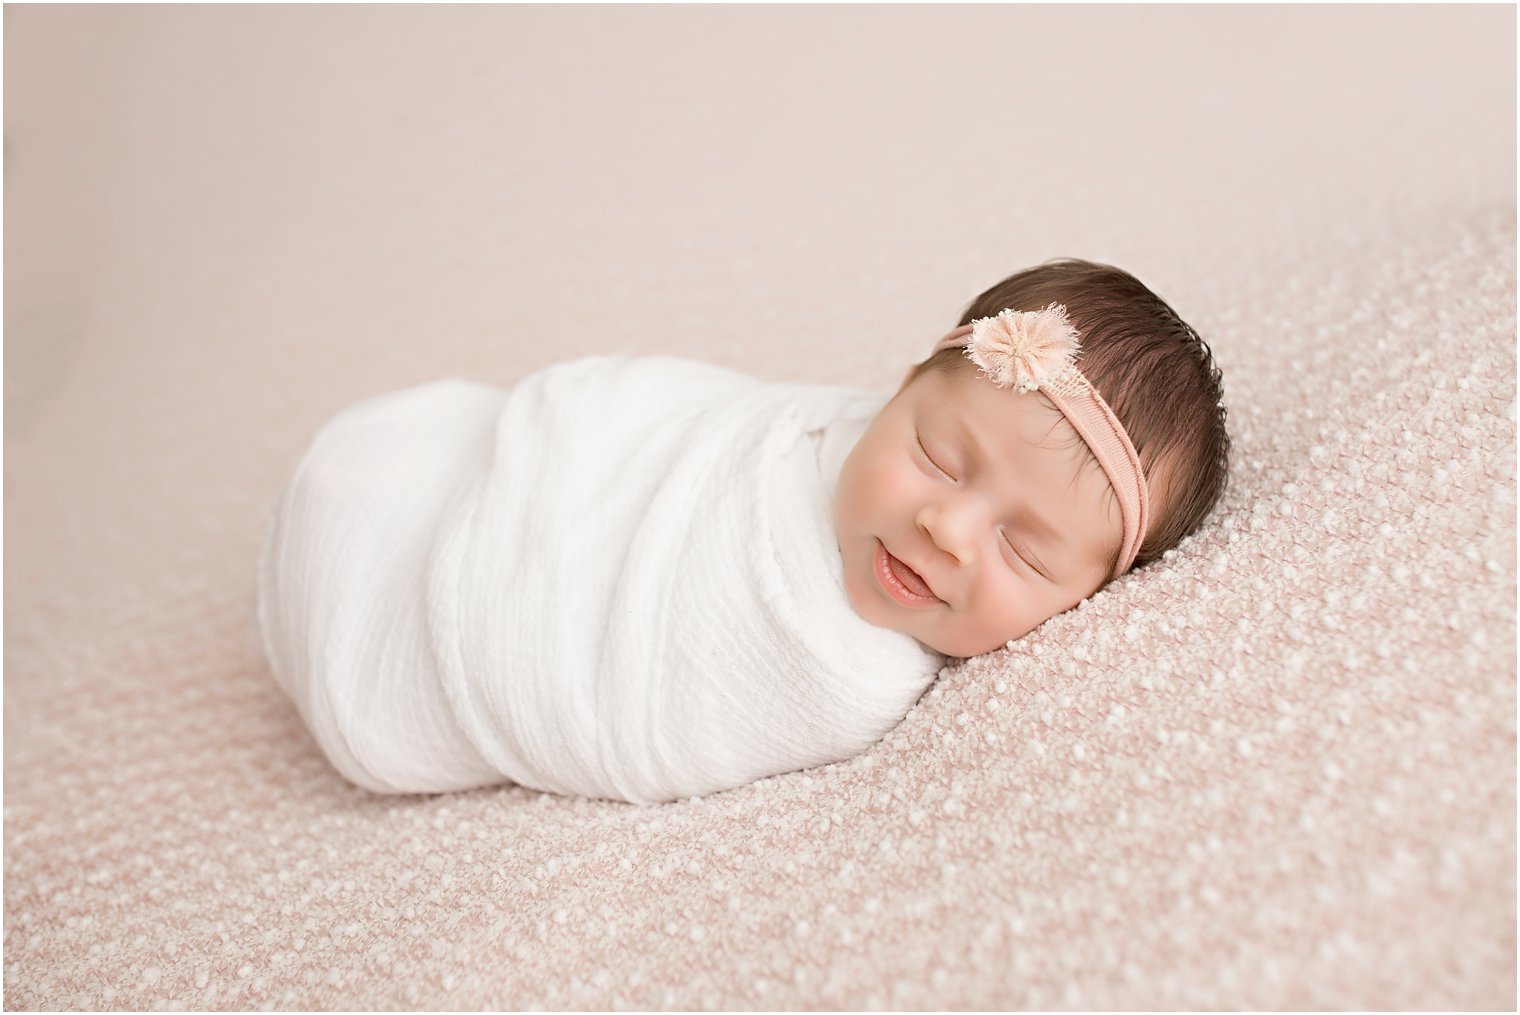 Newborn baby smiling while she sleeps